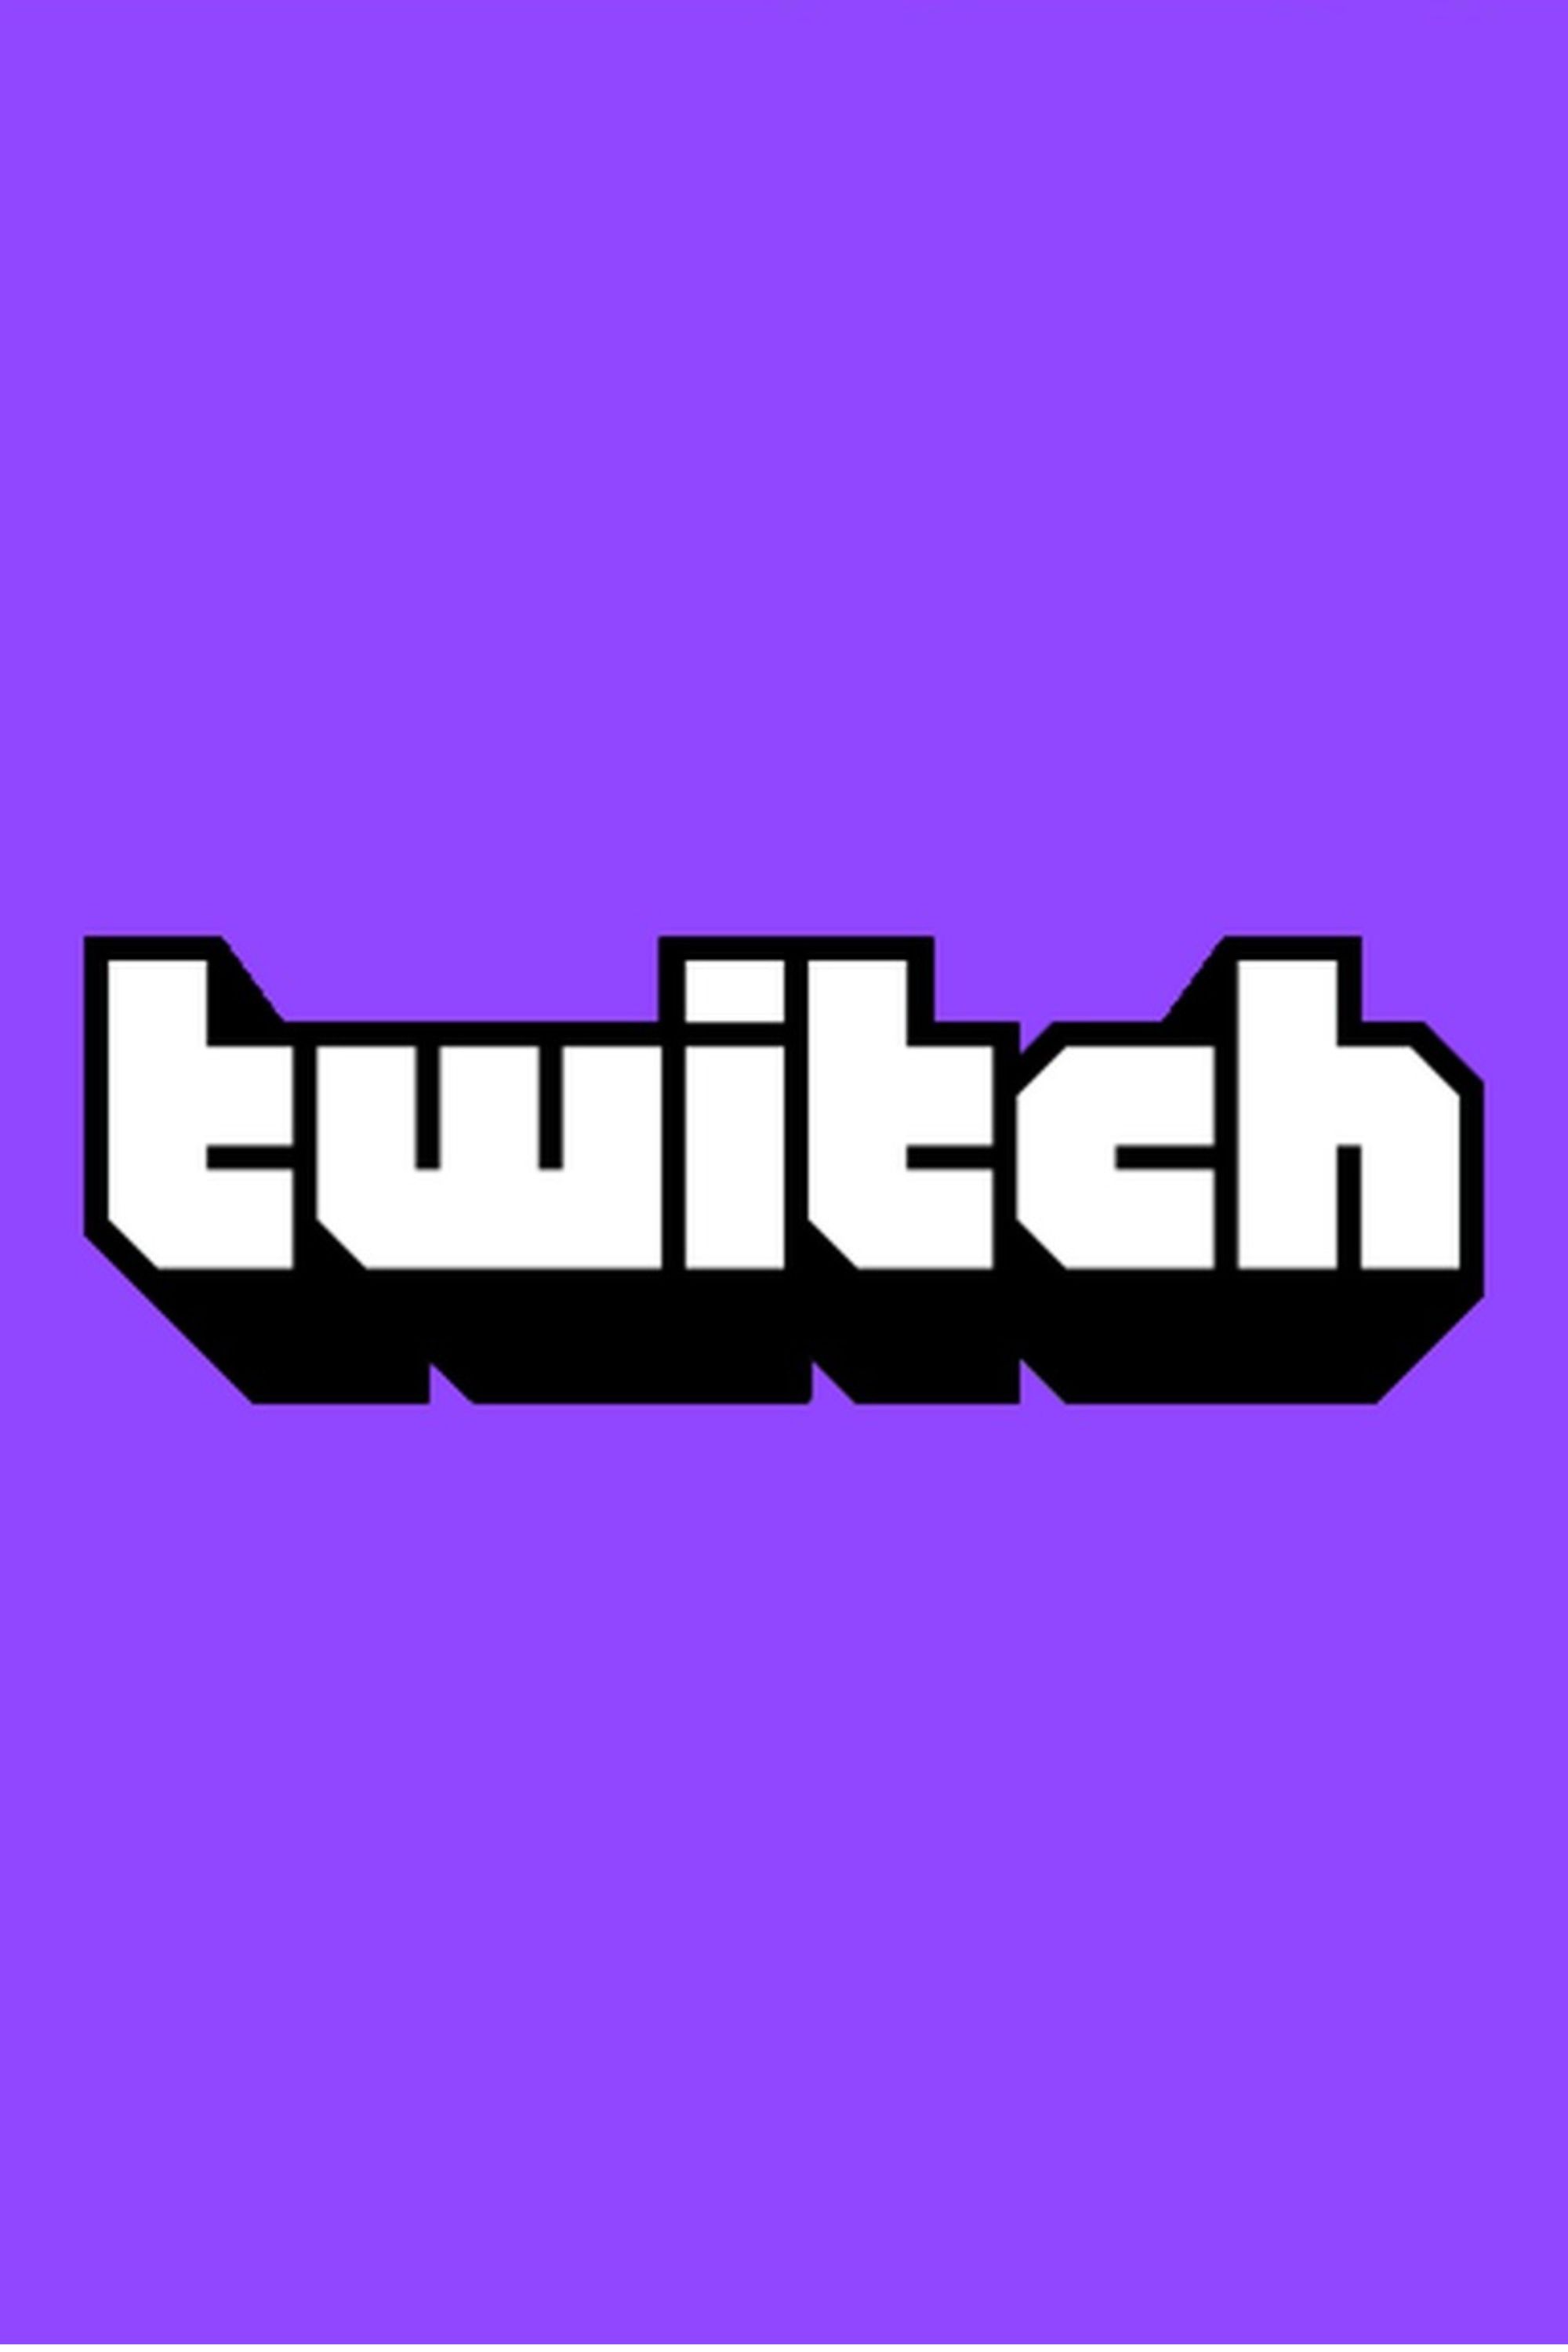 Twitch logo over purple background